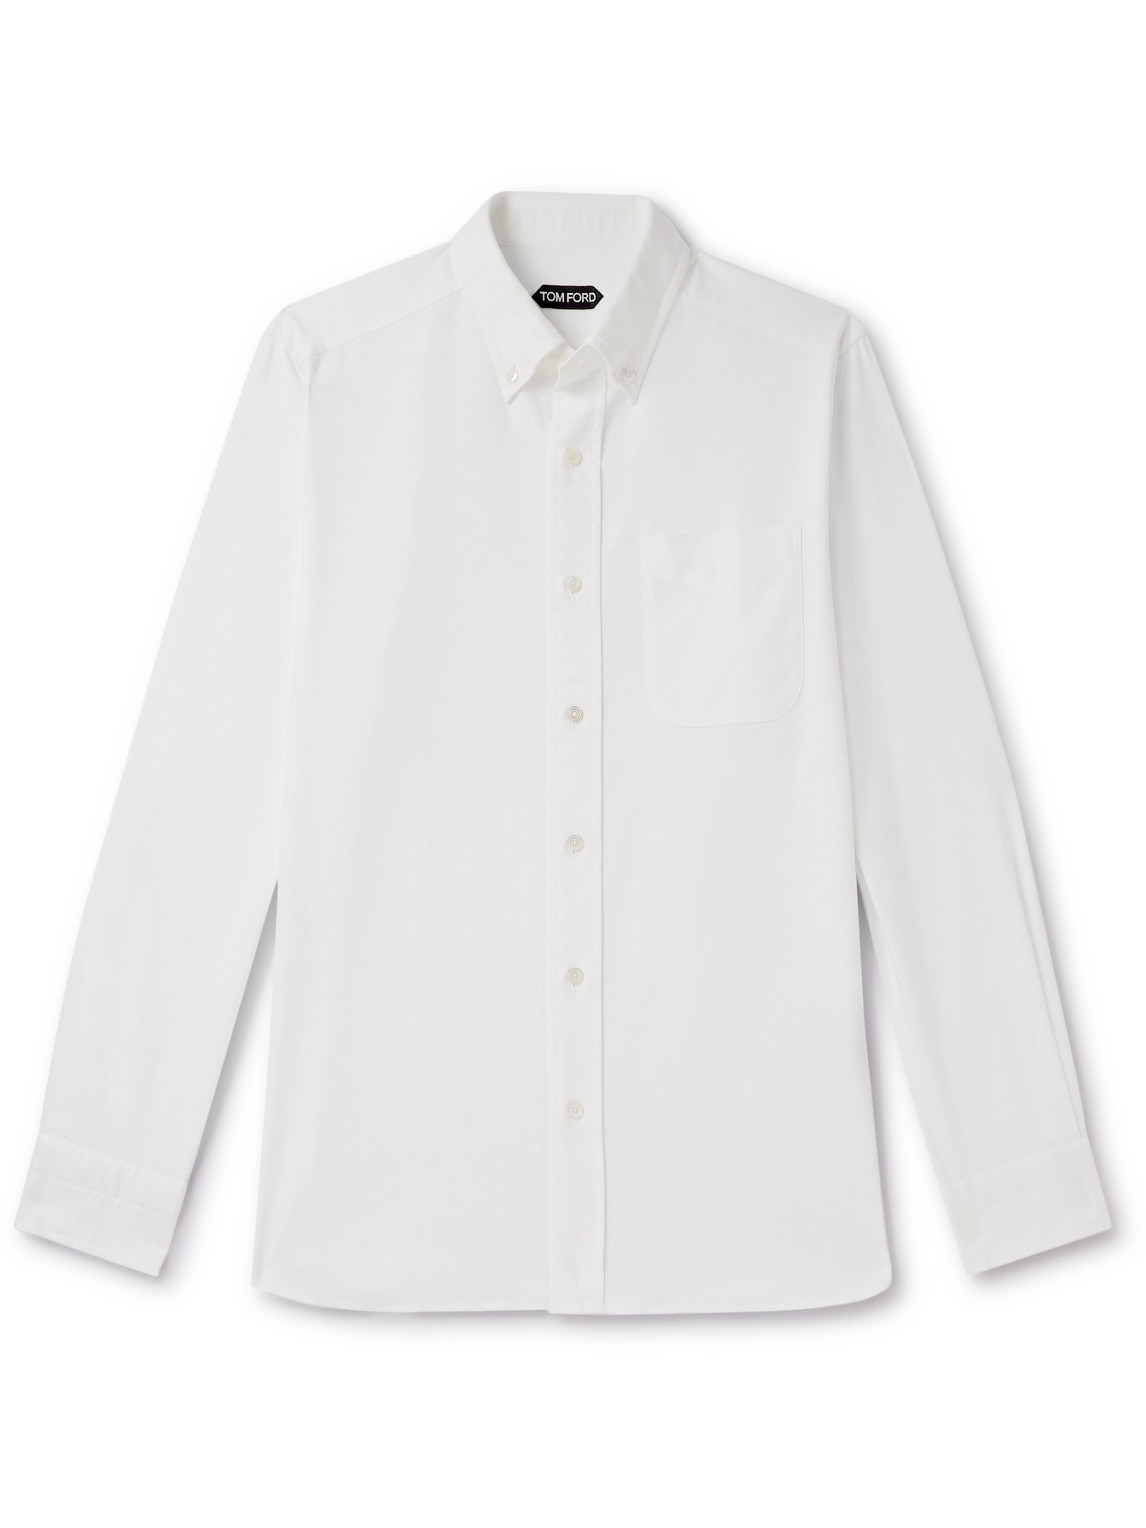 TOM FORD - Button-Down Collar Cotton Oxford Shirt - Men - White - EU 43 von TOM FORD